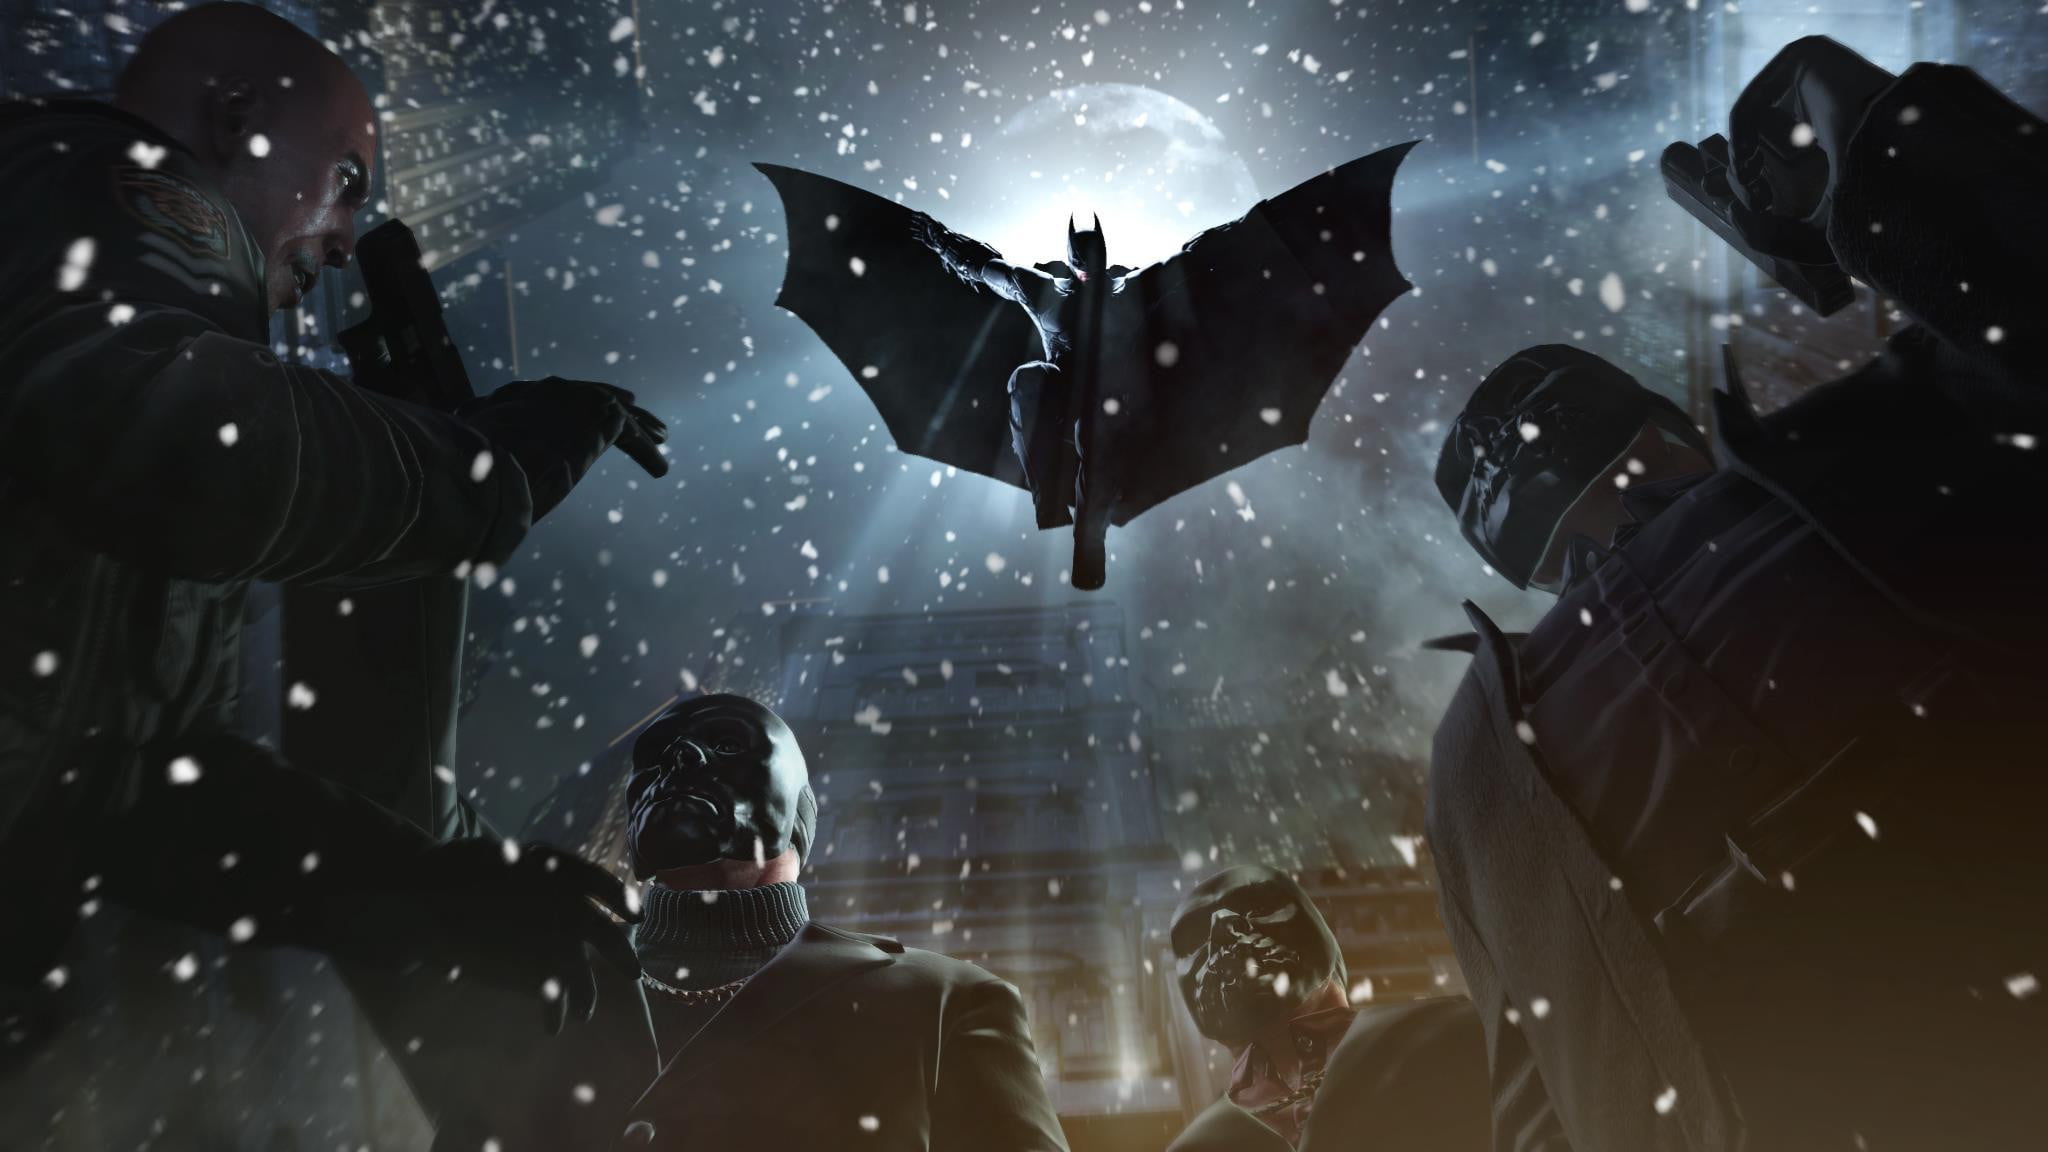 Batman Arkham Origins 1